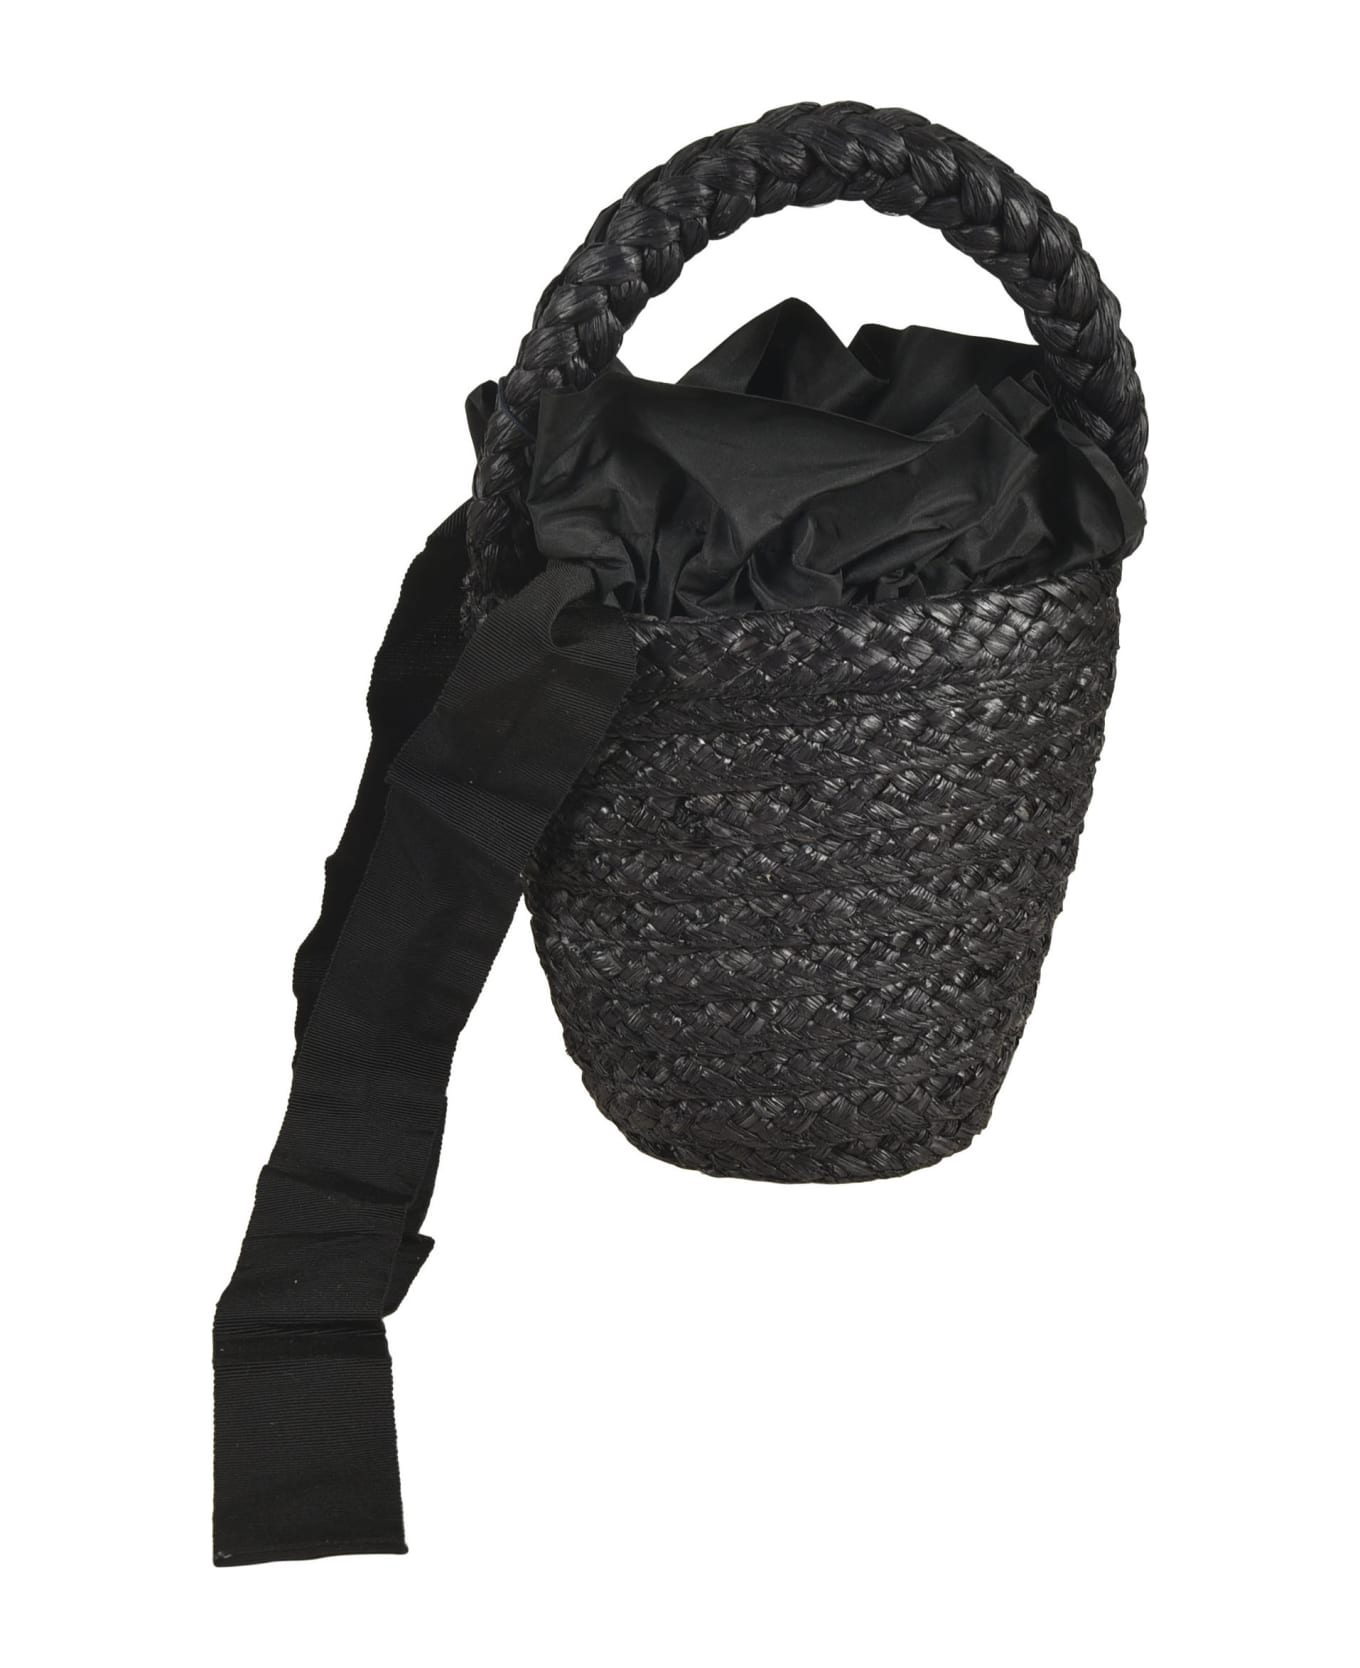 Patou Weave Bucket Bag - Black